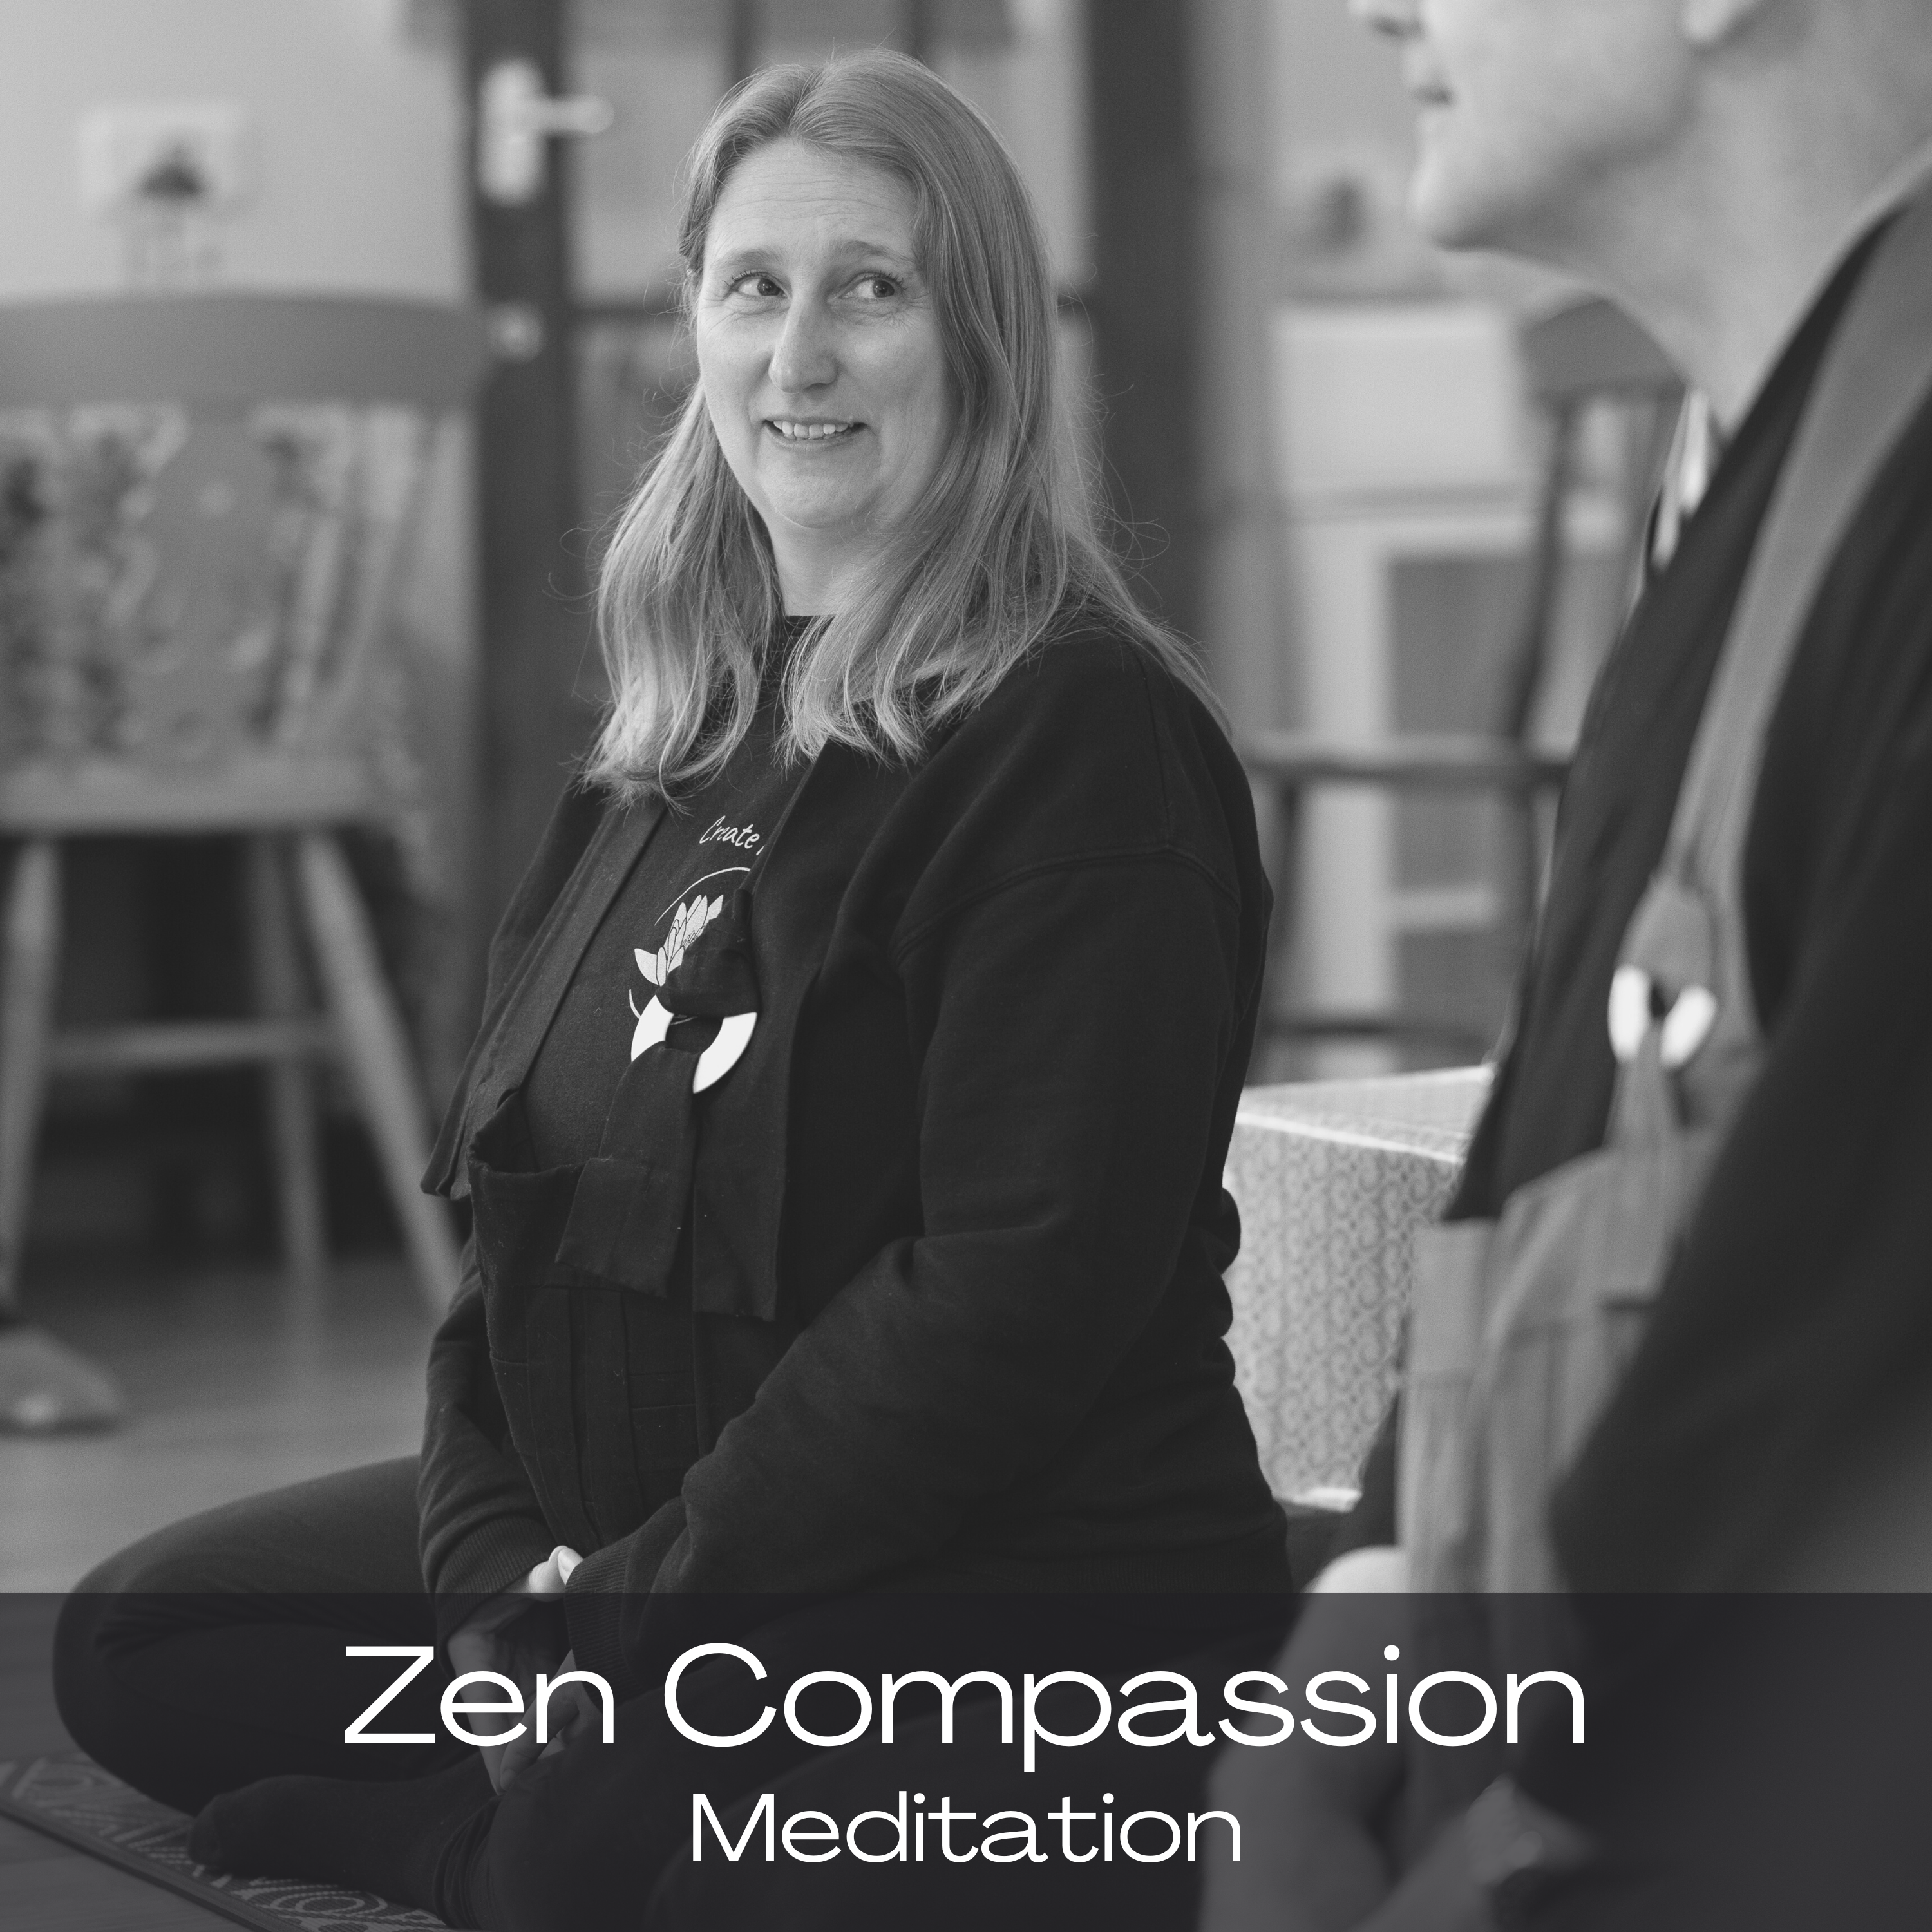 Zen Compassion Meditation - The heart of loving-kindness